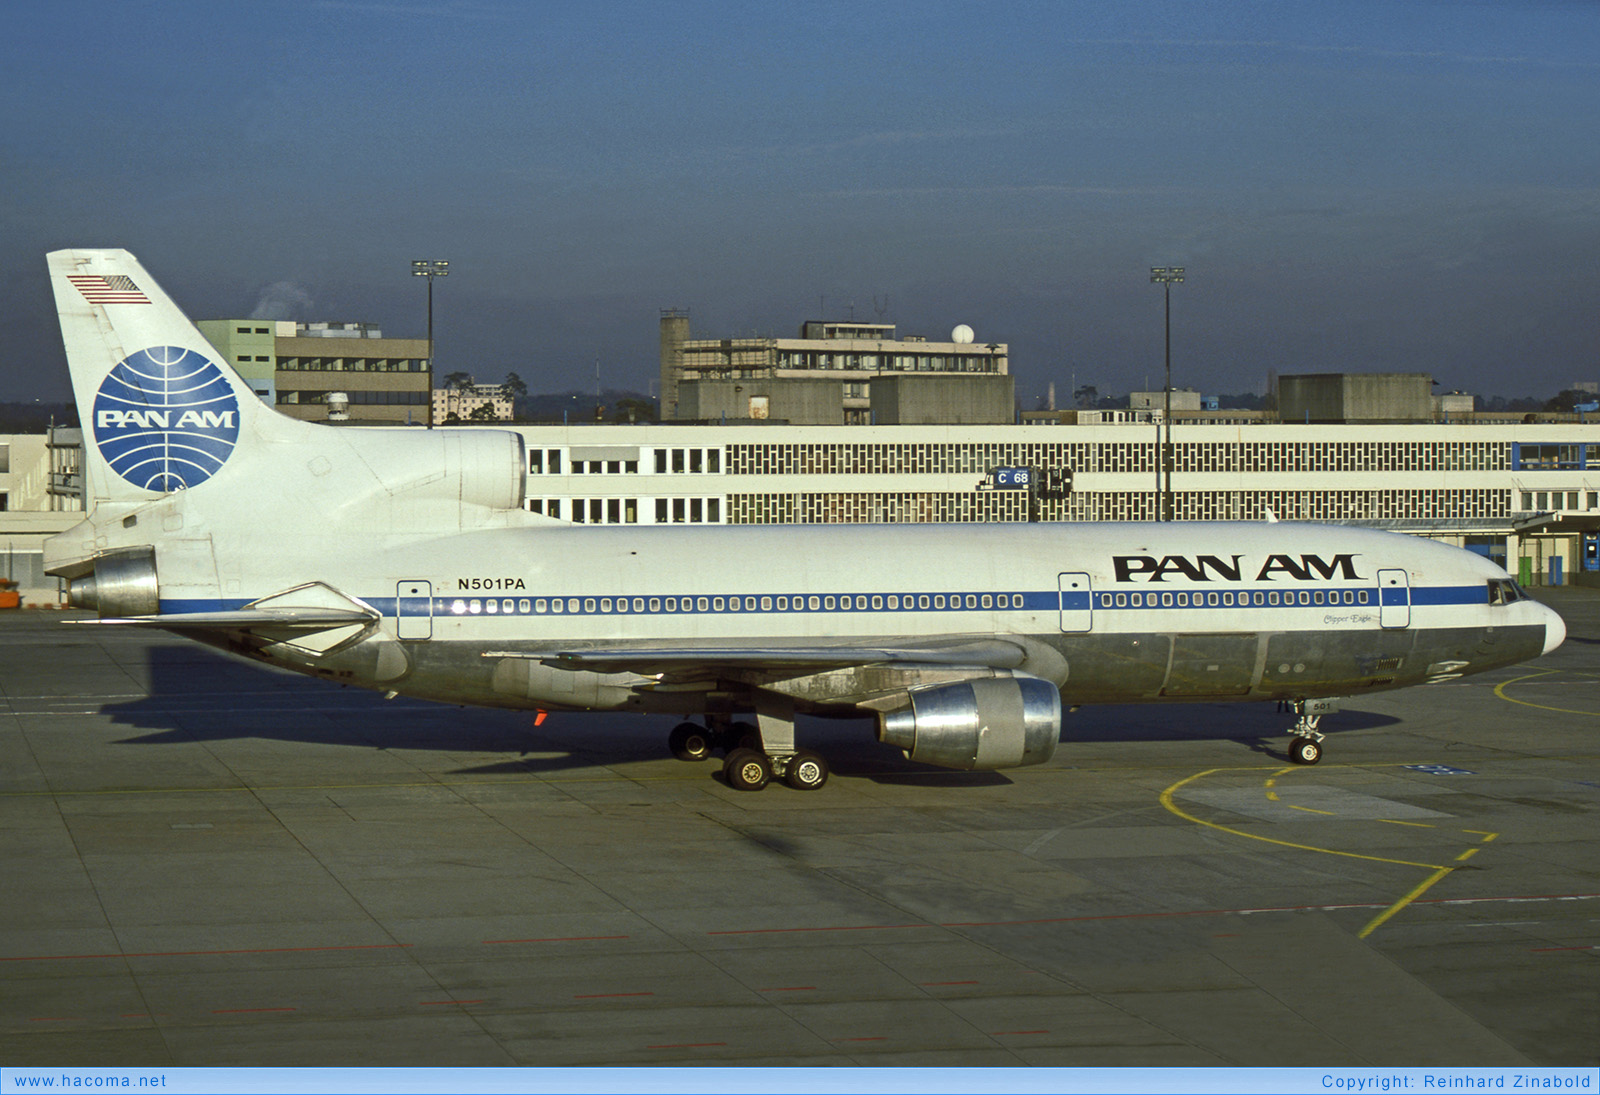 Foto von N501PA - Pan Am Clipper Eagle - Flughafen Frankfurt am Main